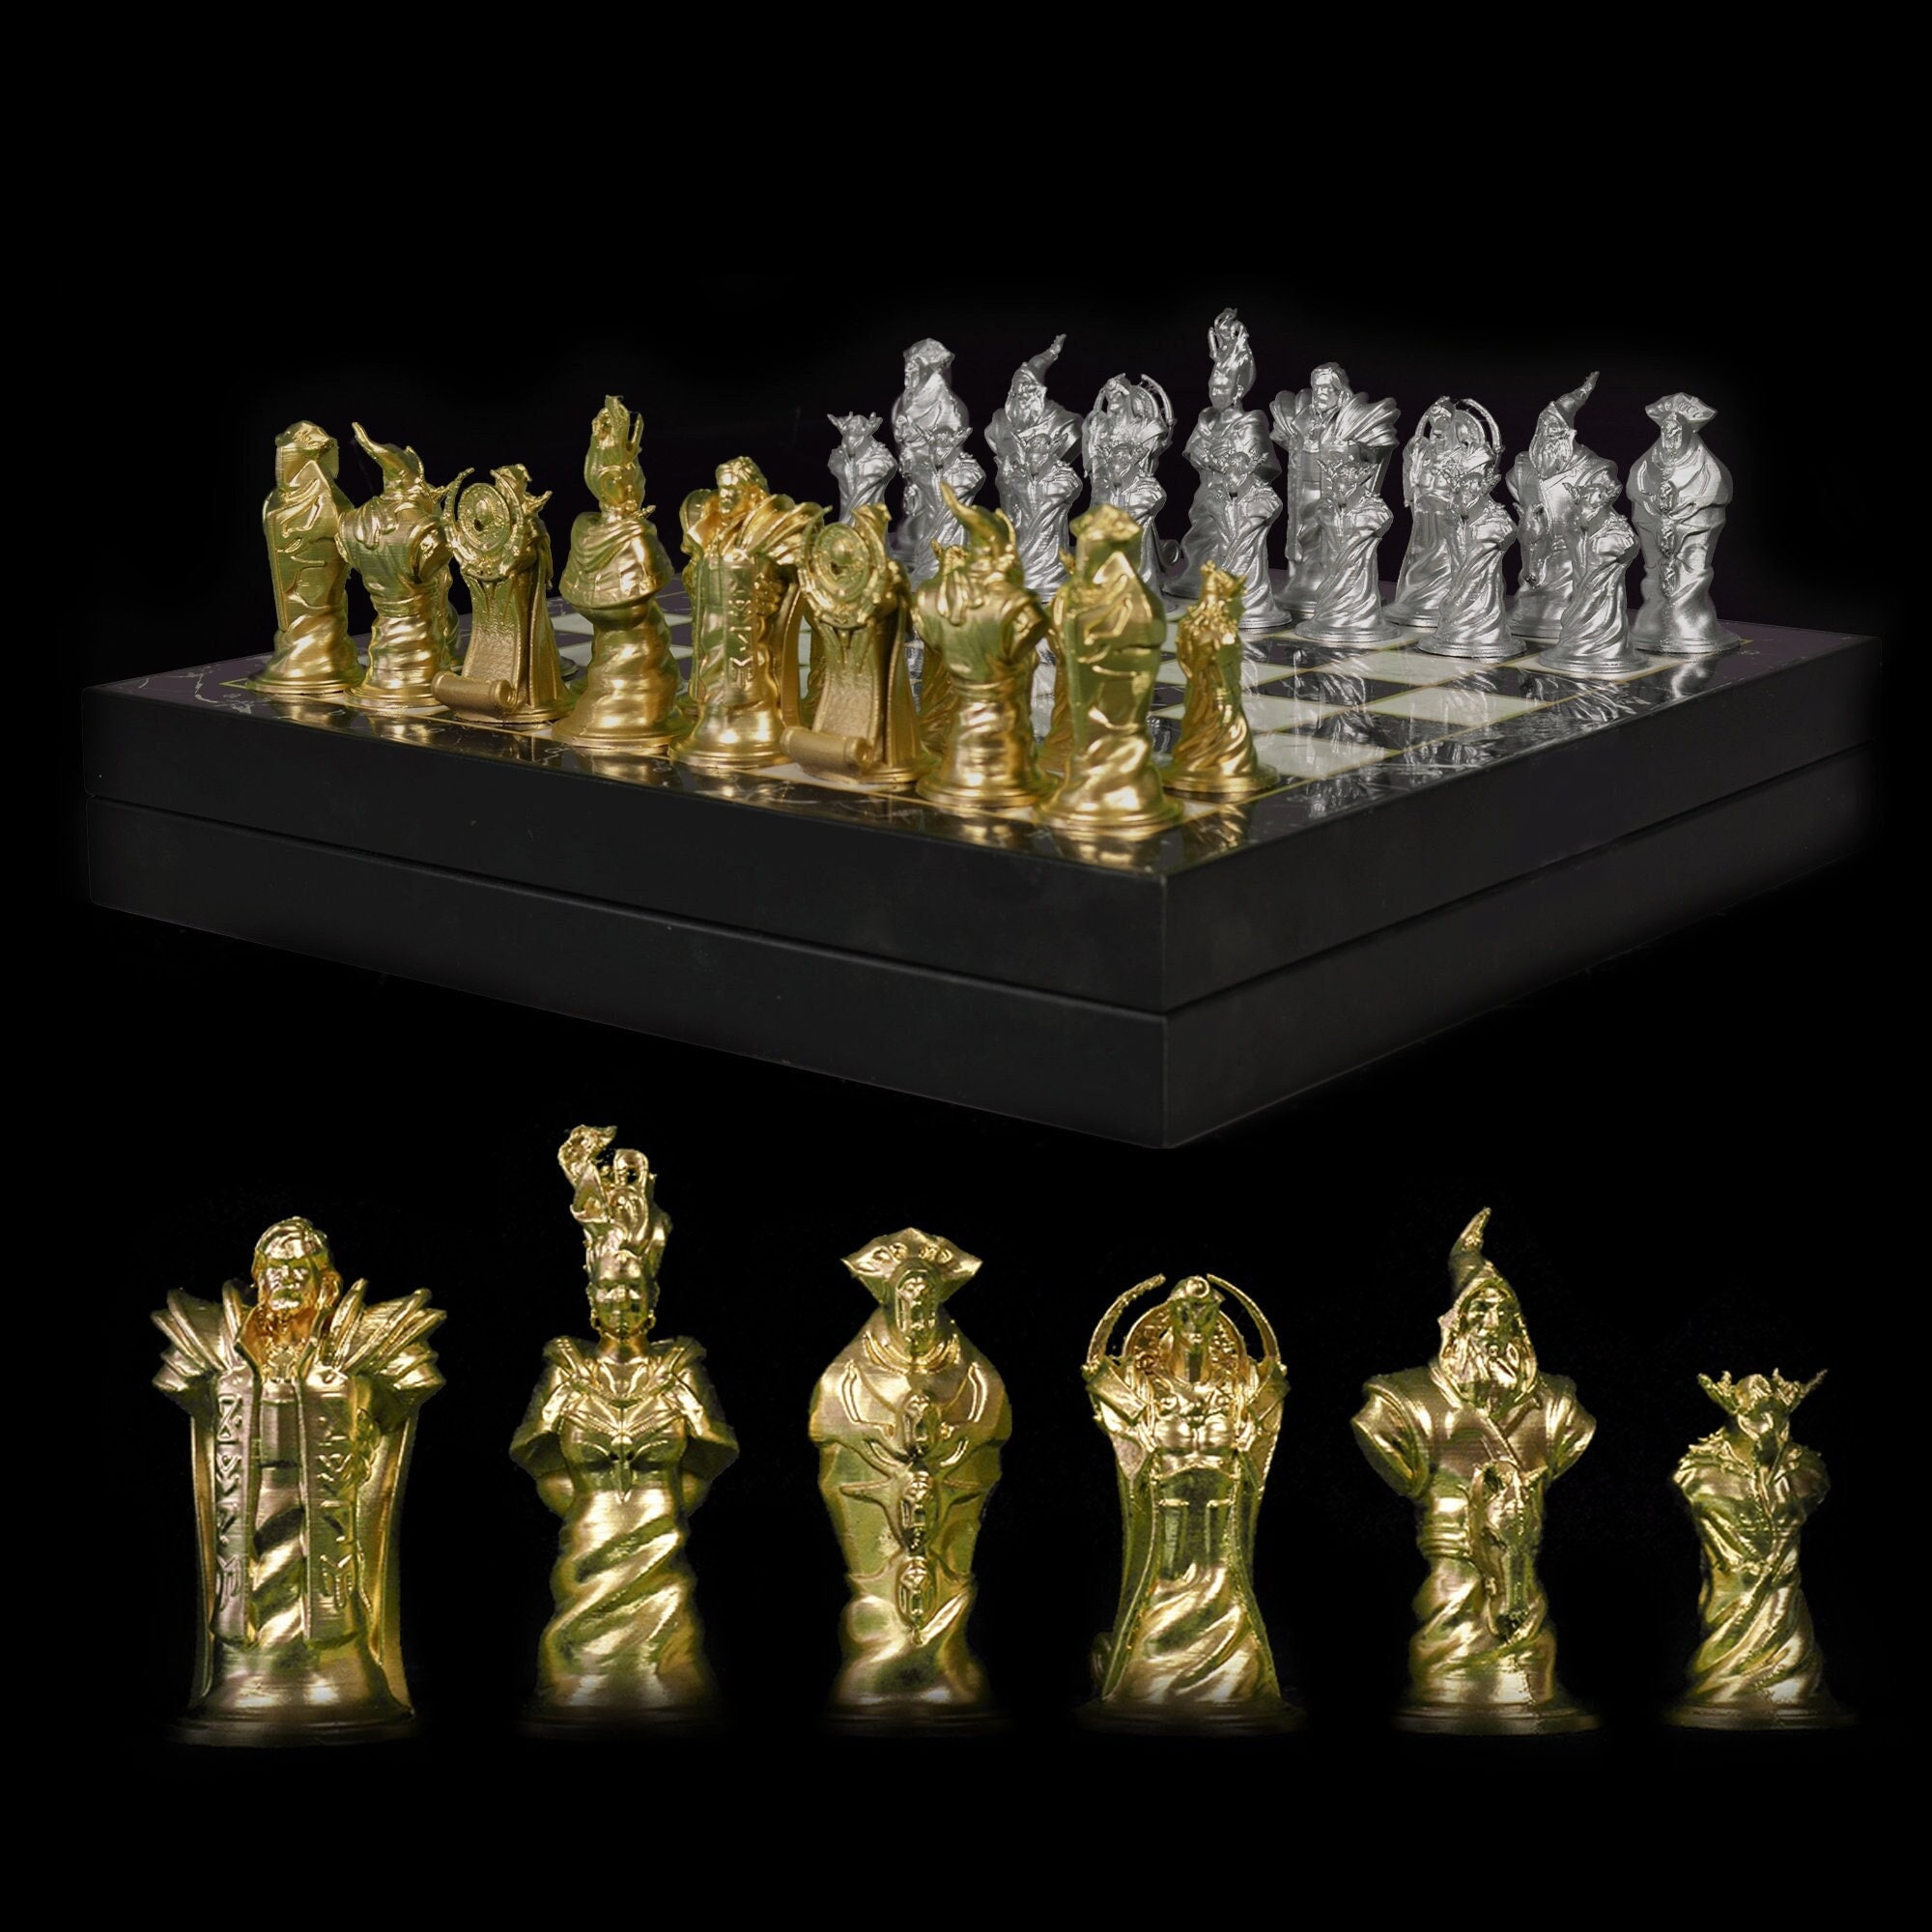 Royal Selangor Classic Star Wars Pewter & Glass Chess Set - M